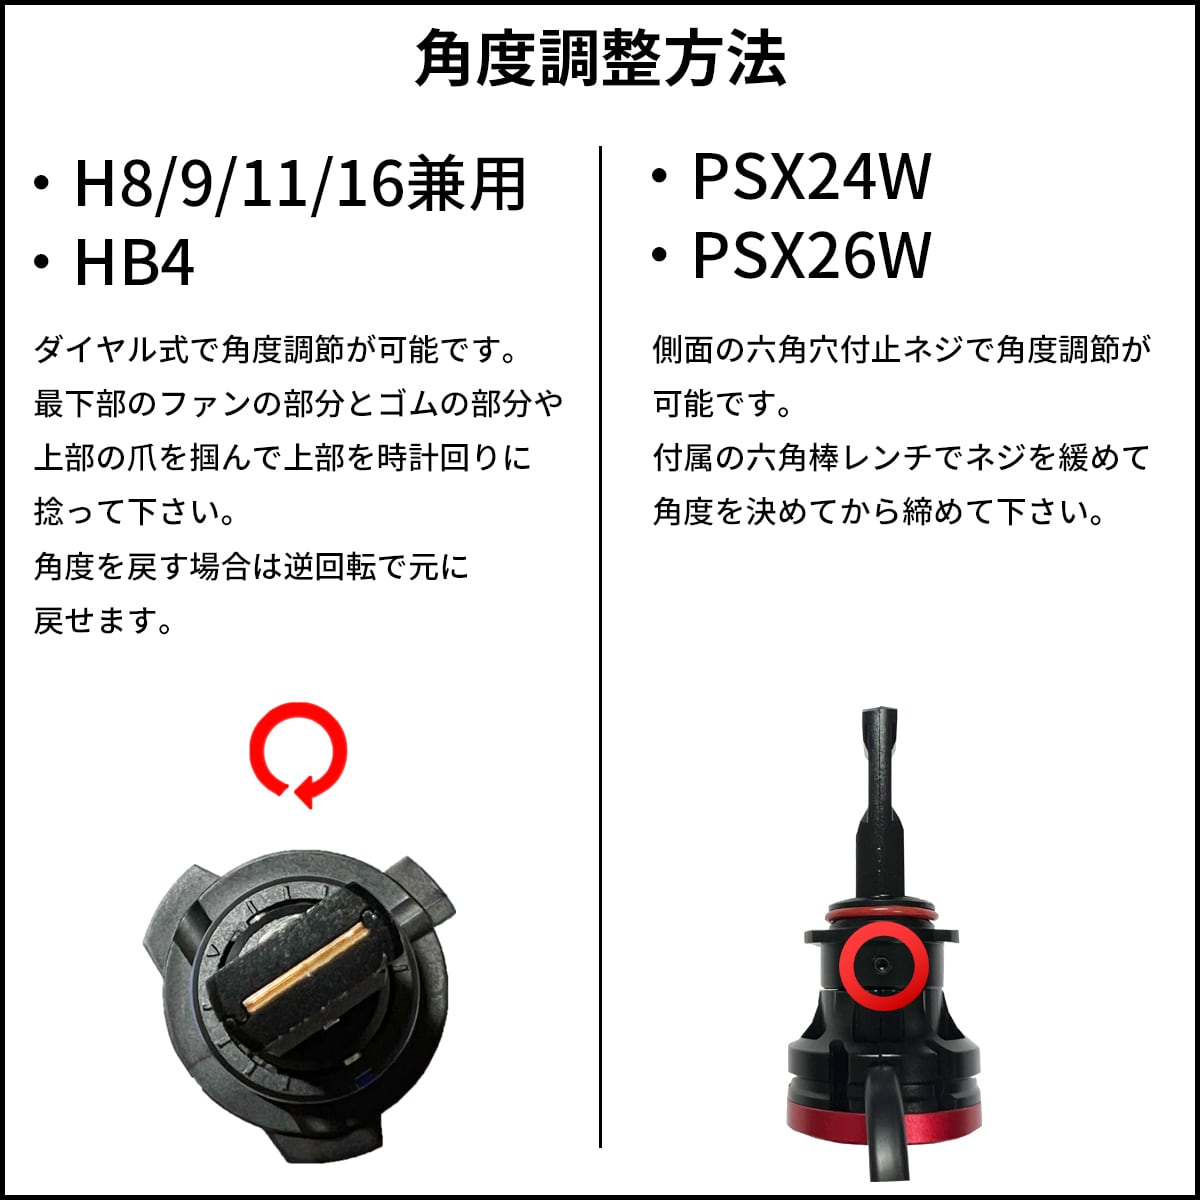 LEDフォグランプ H8 三色 パレット/SW MK21S系 H20.1〜H25.2